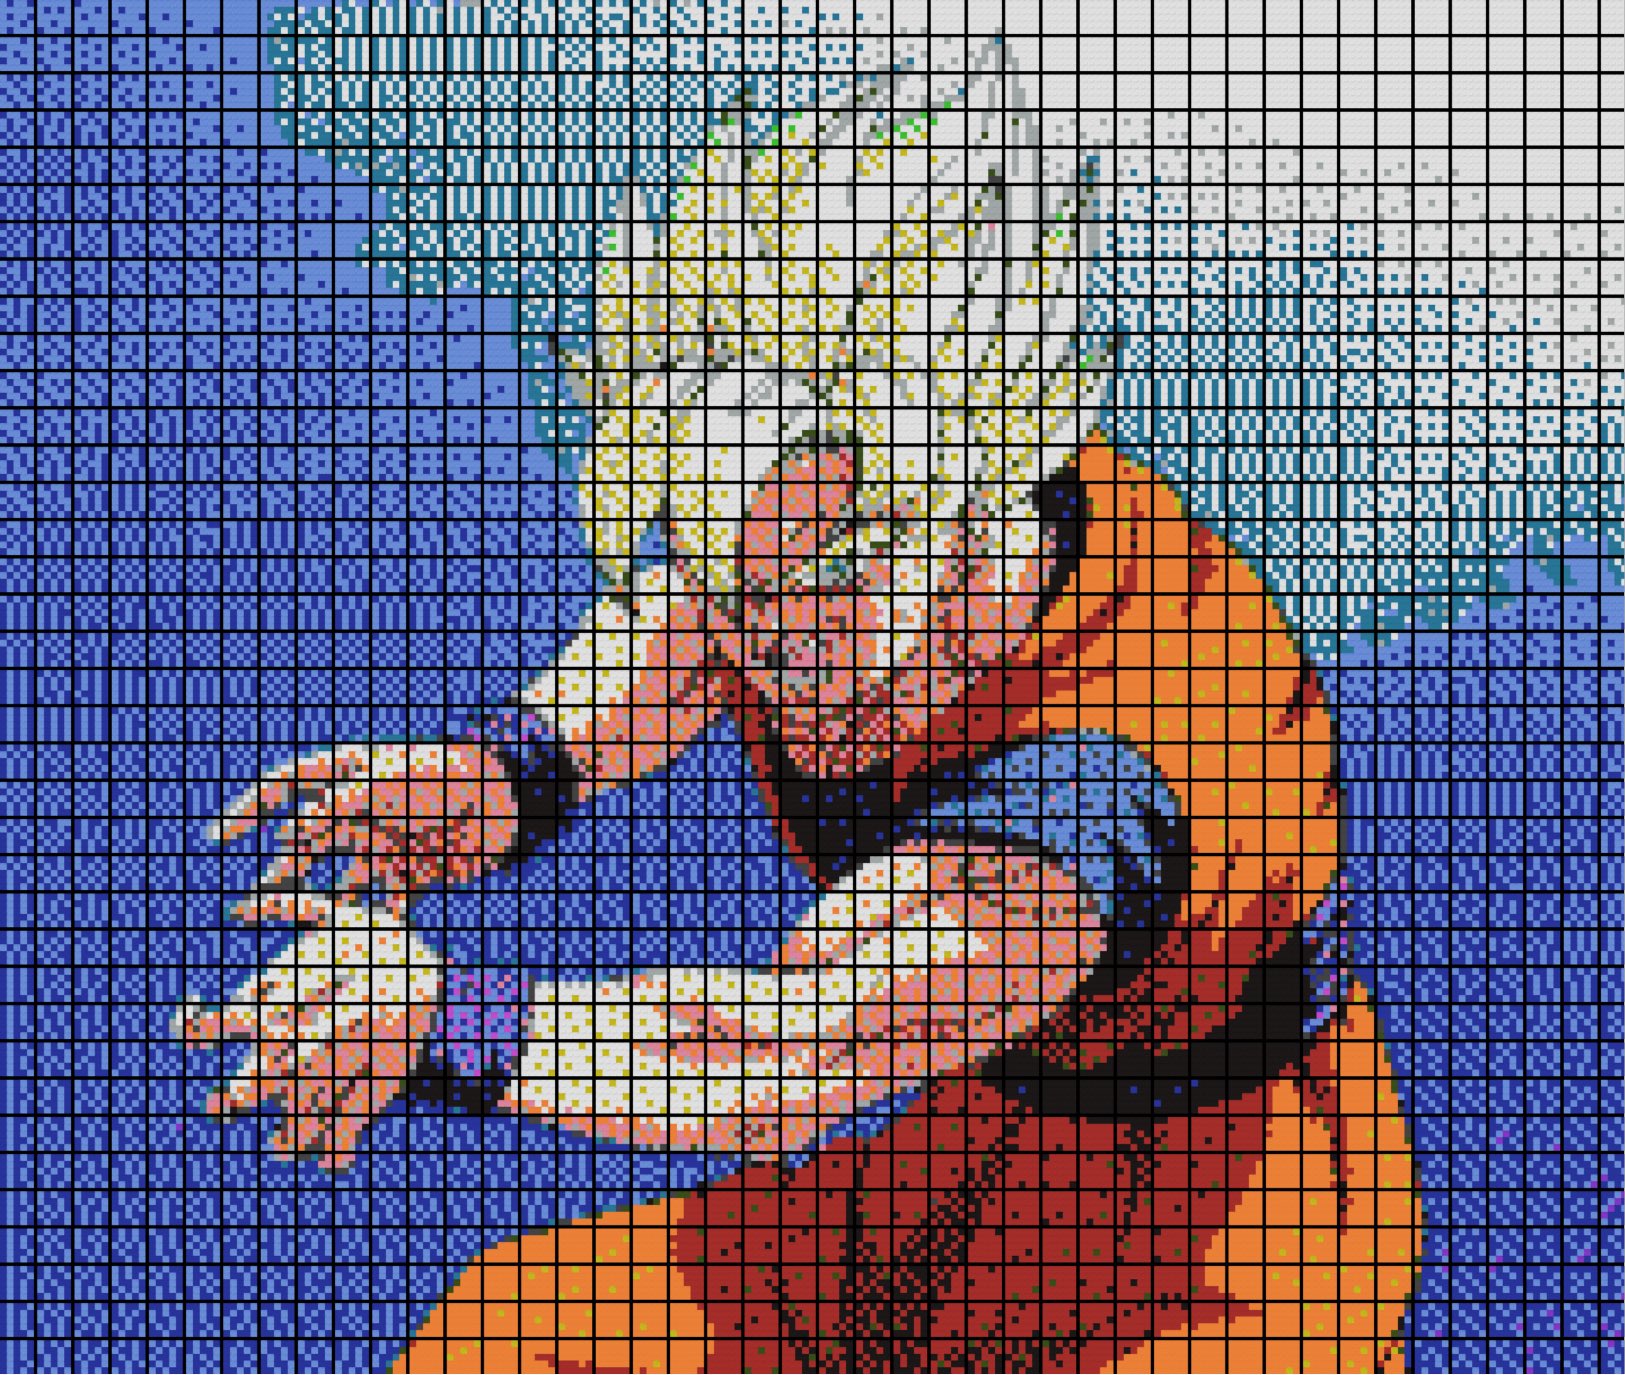 Krita Pixel Art Grid - When i hit the pixel art brush, the brush is